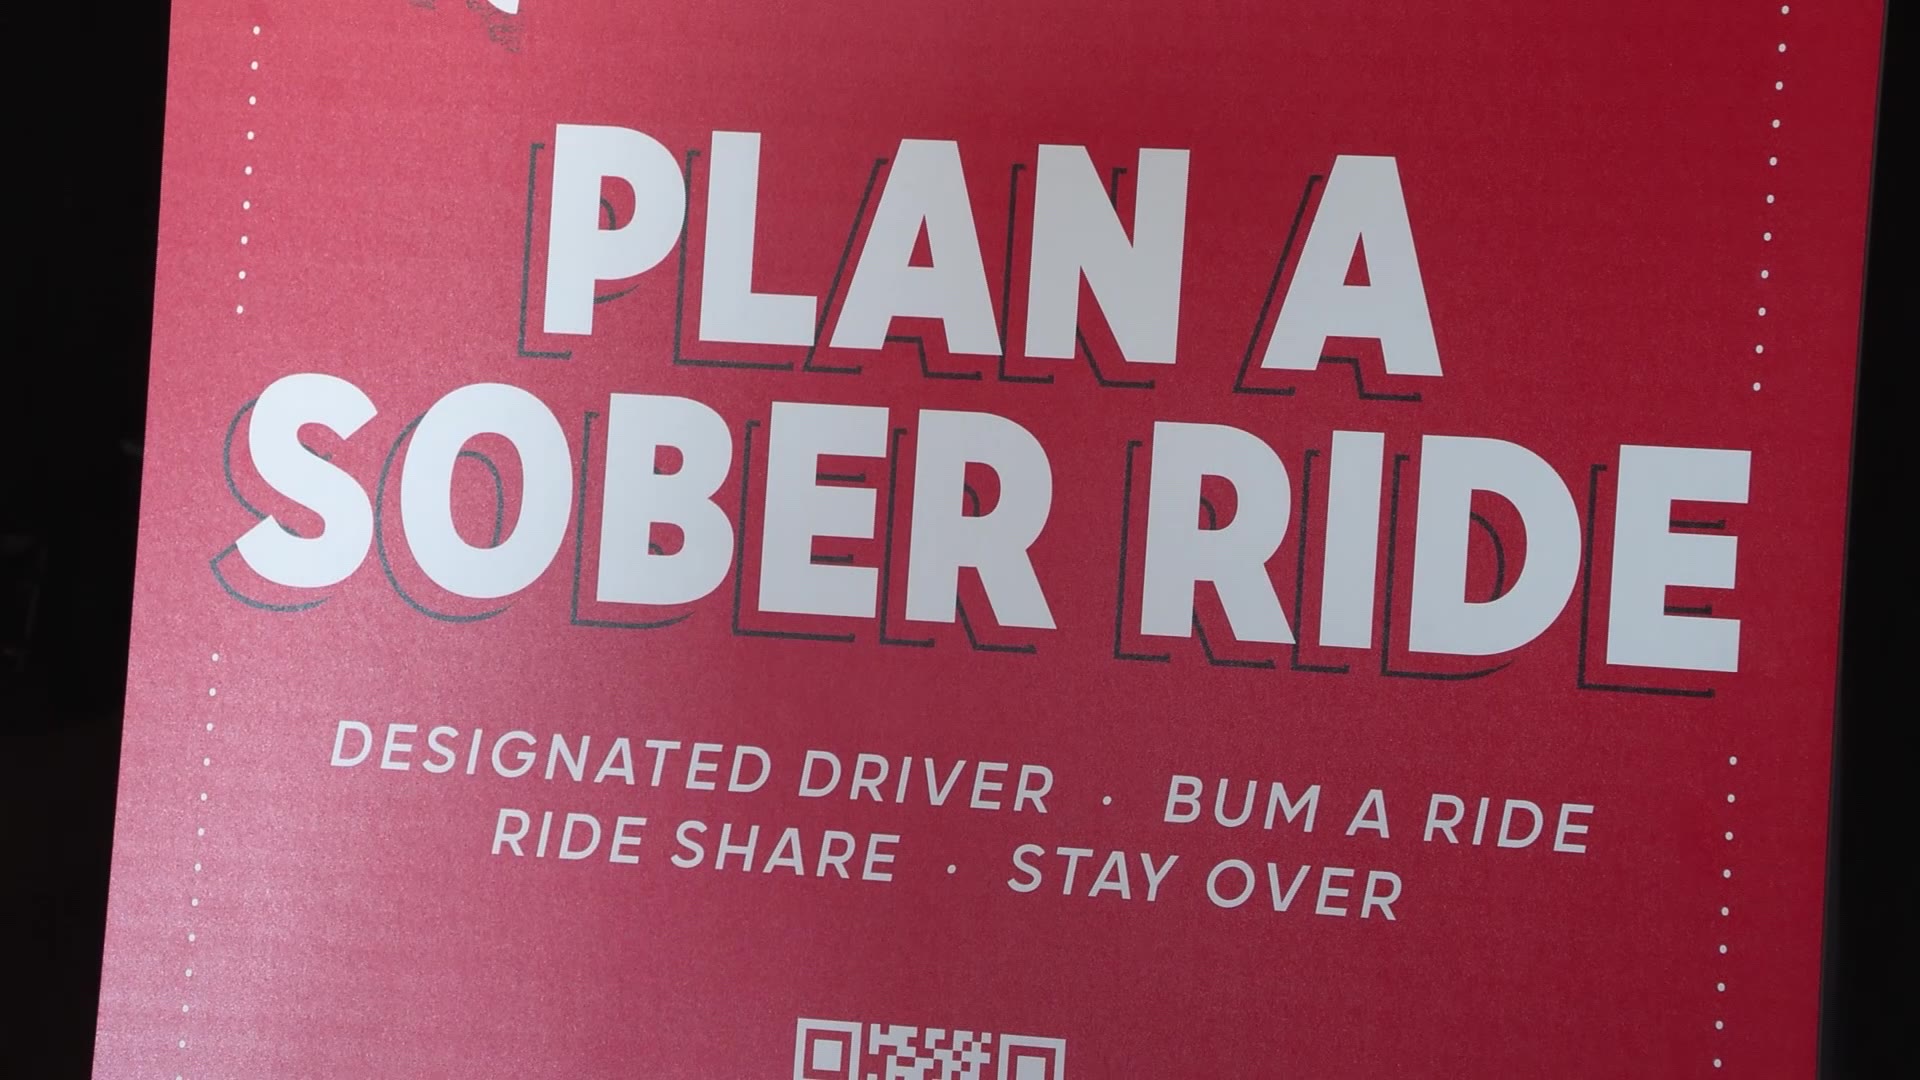 The 'Plan a Sober Ride' campaign sign at a Salt Lake bar....